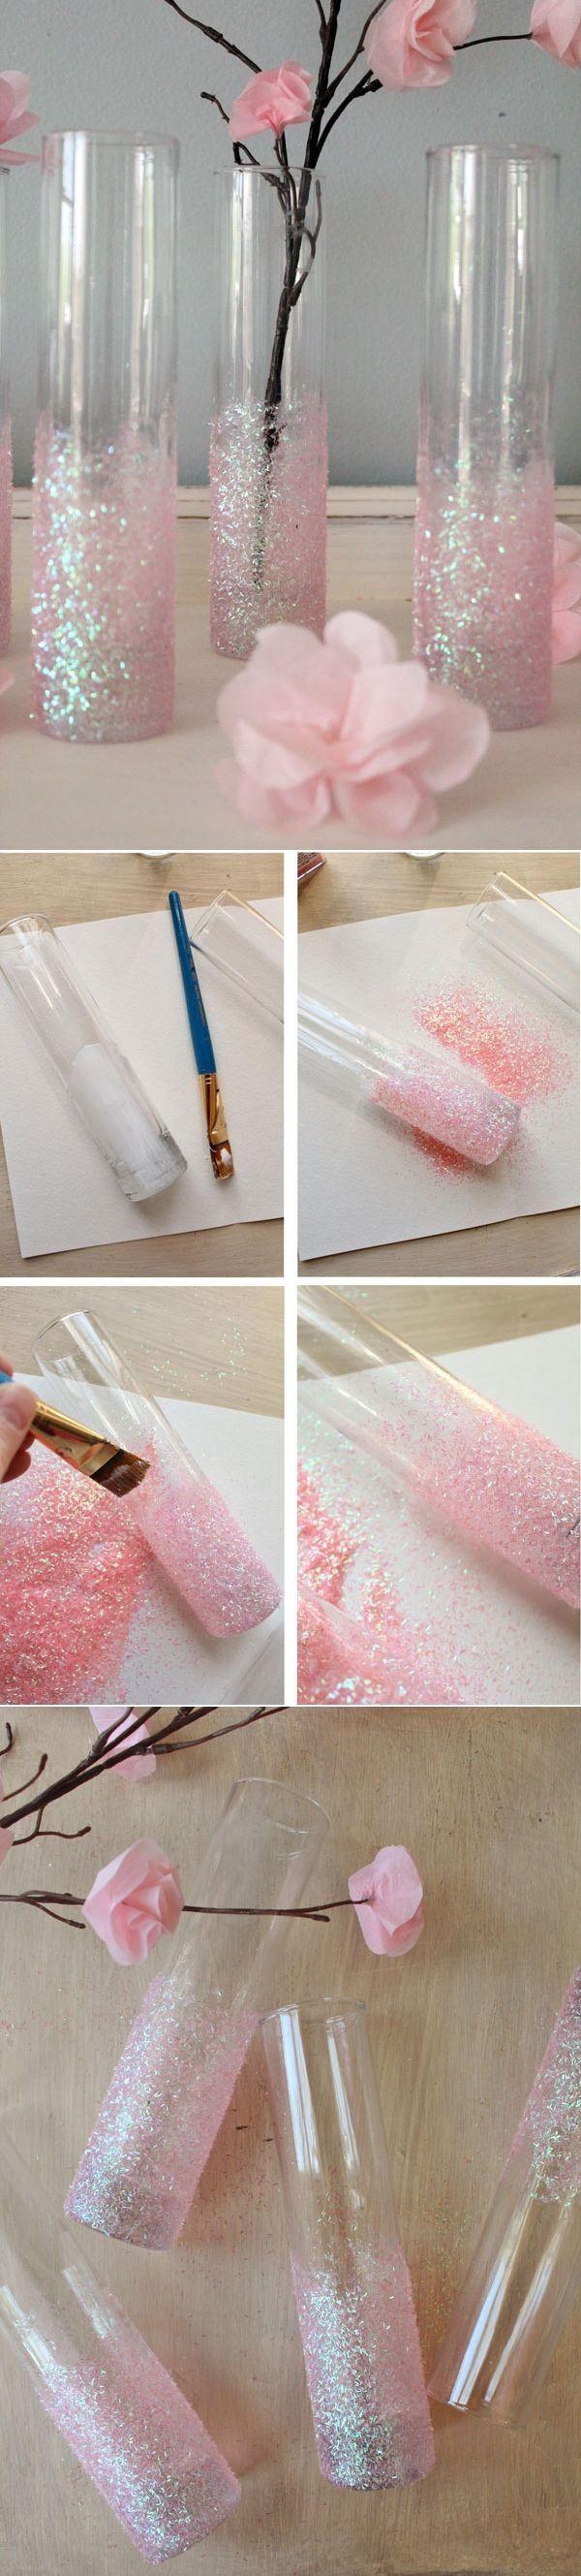 زفاف - DIY Glittery Pink Vases By Icing Designs